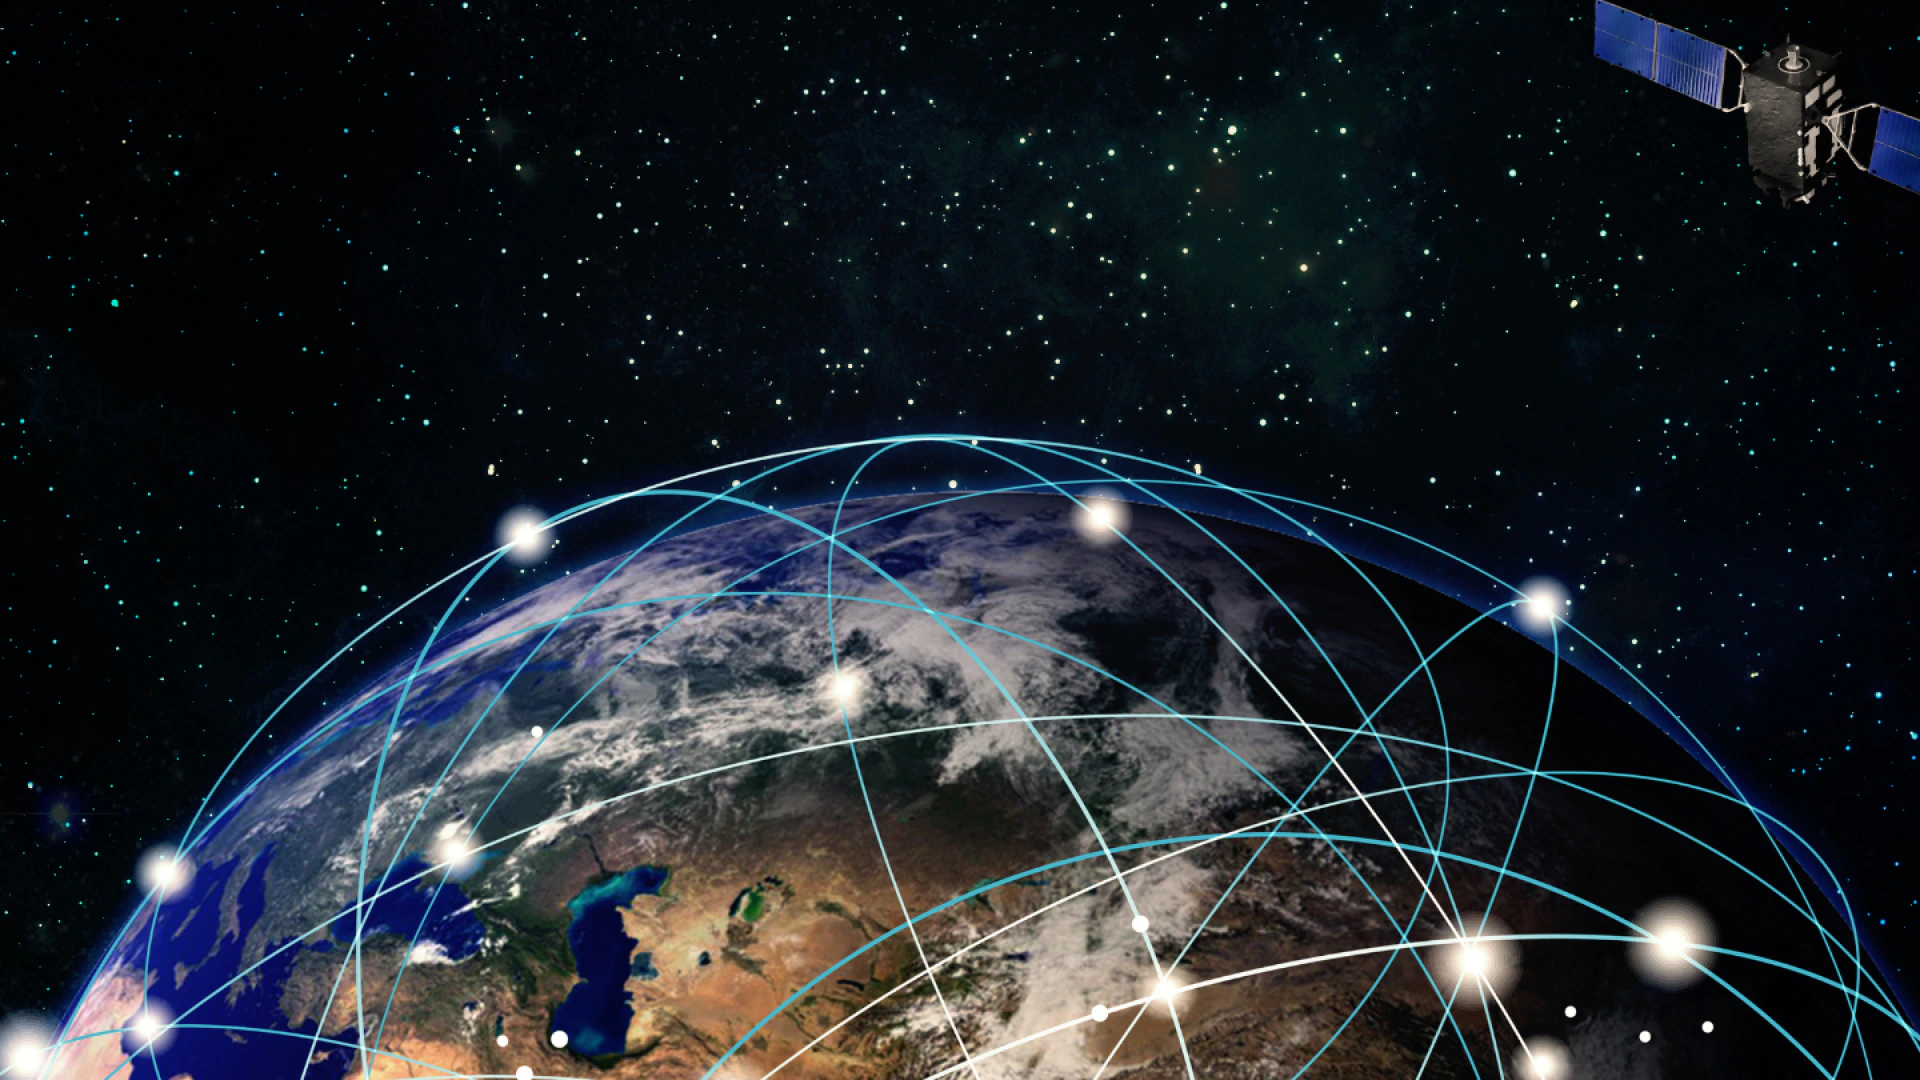 internet satellites orbit the earth